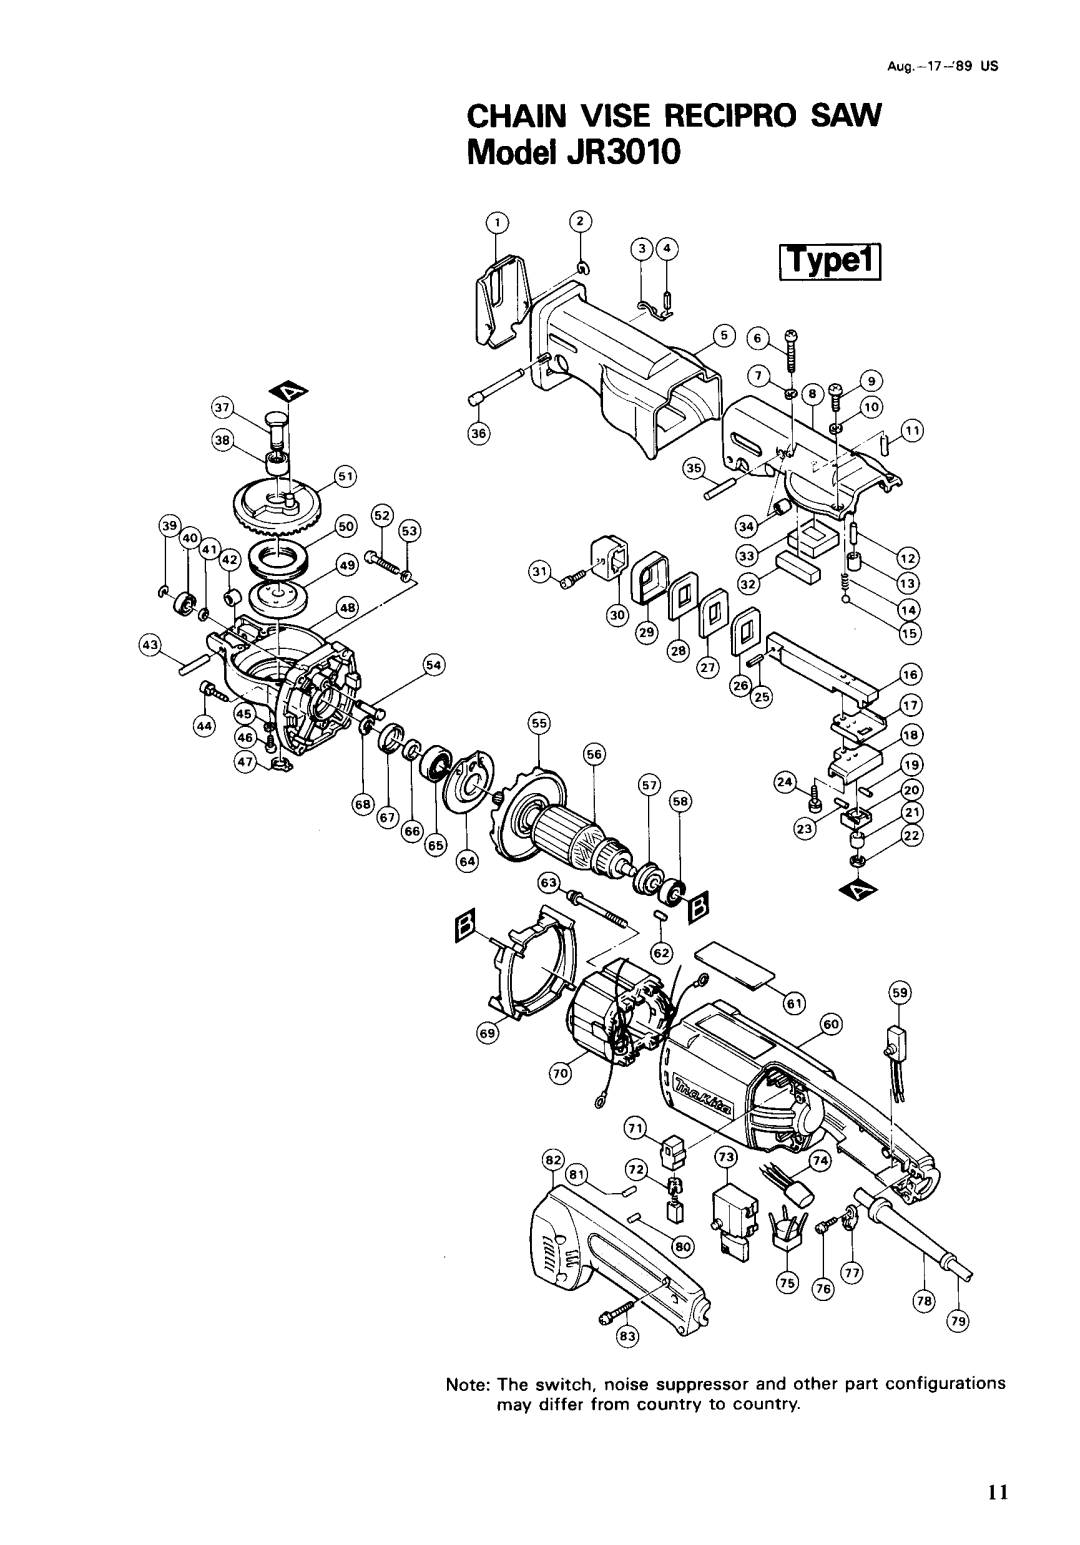 Makita instruction manual Model JR3010, Chain Vise Recipro Saw, Aug.-17-89 US 